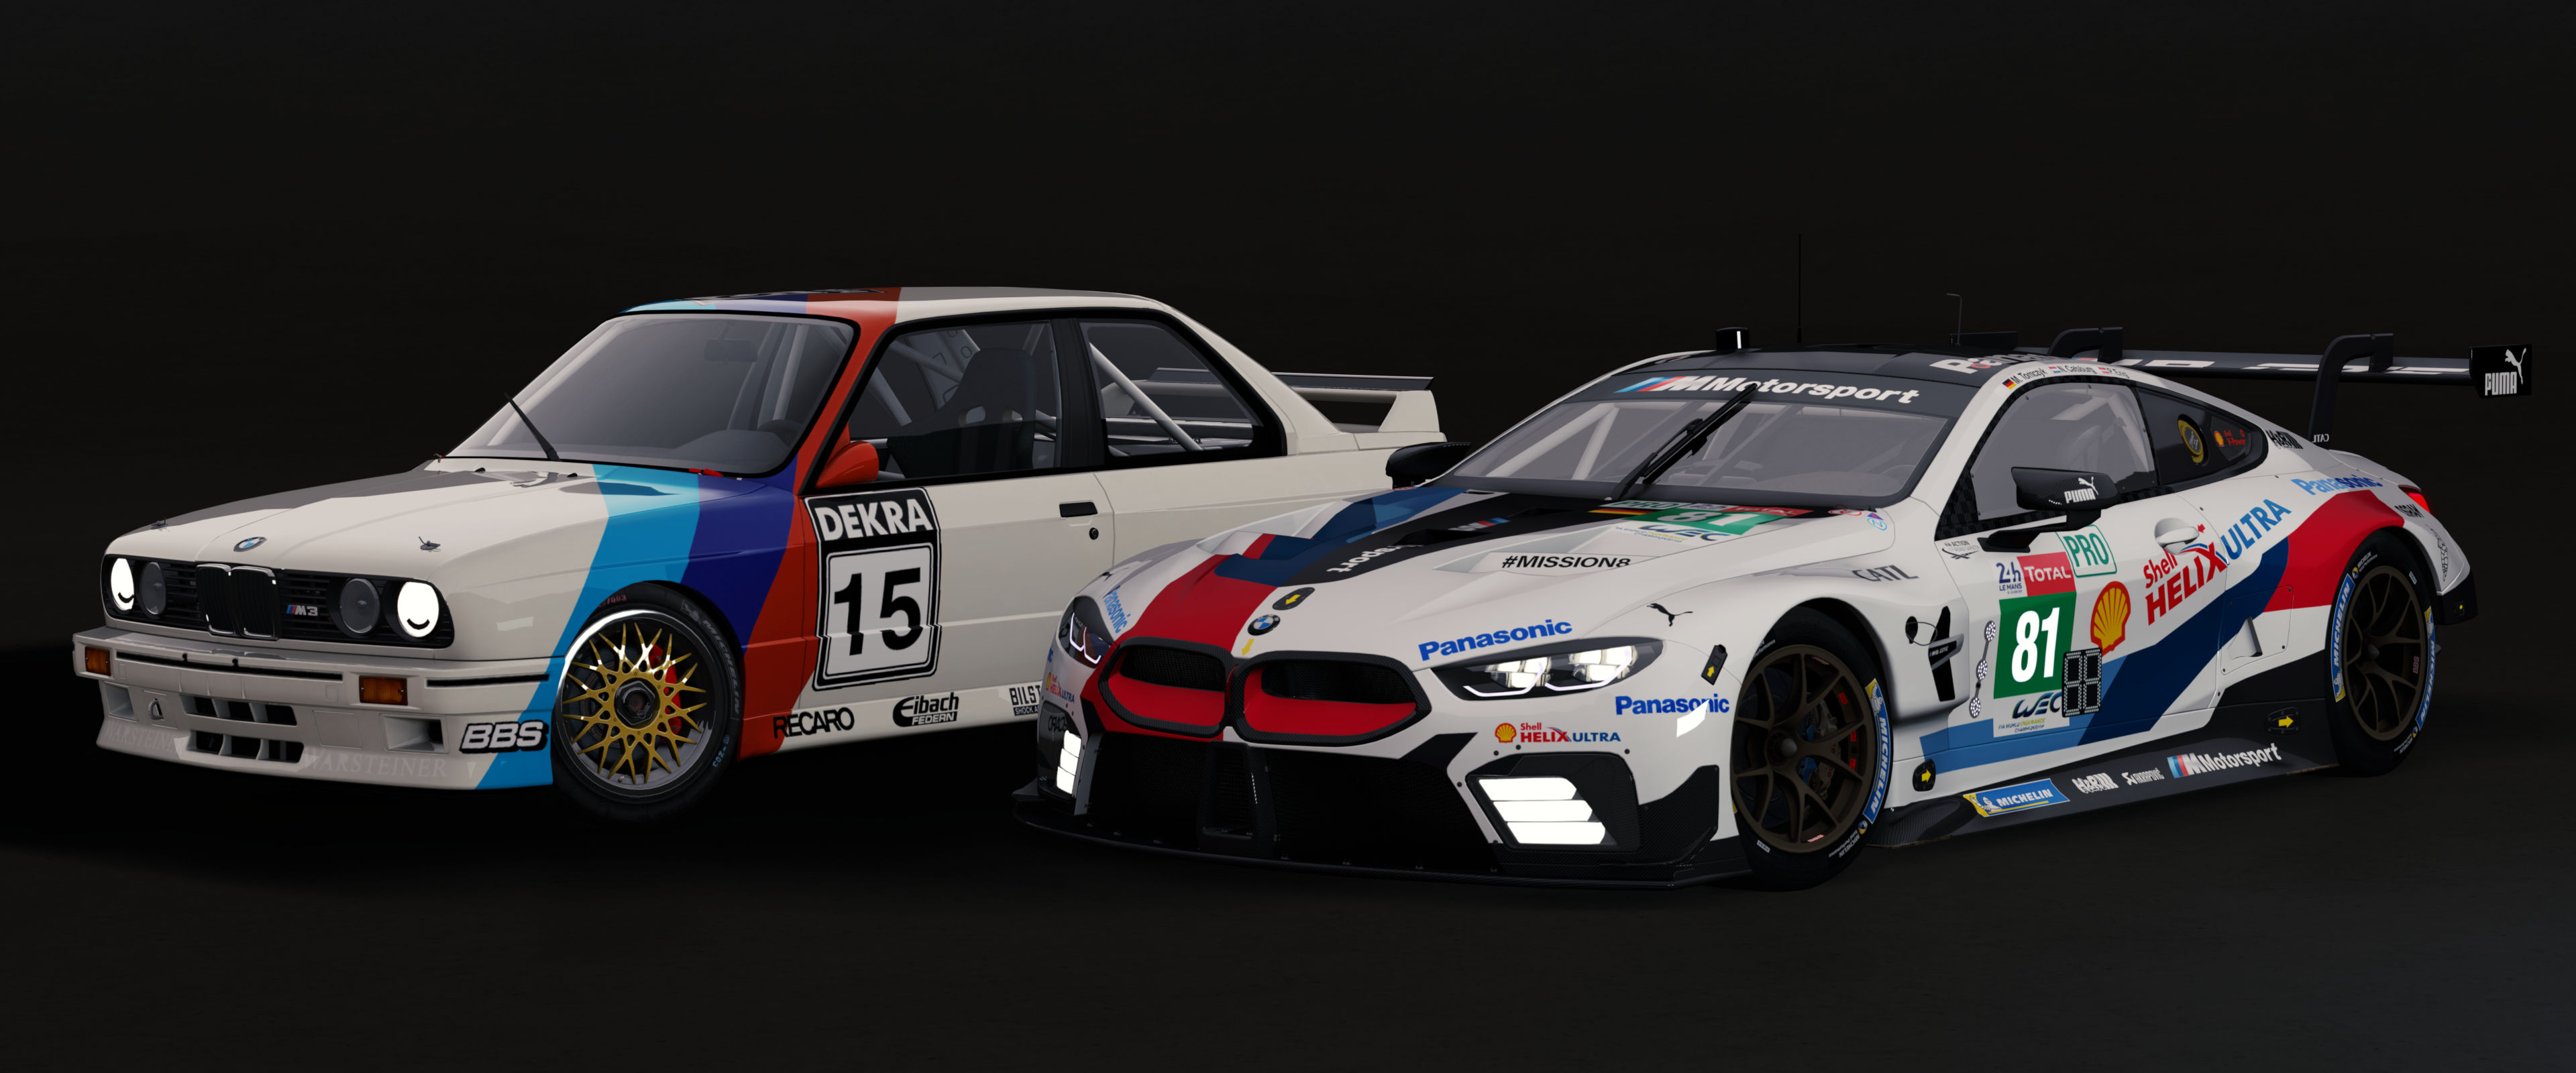 Motorsport BMW BMW E30 Race Cars Assetto Corsa Car Livery Video Games 3840x1600